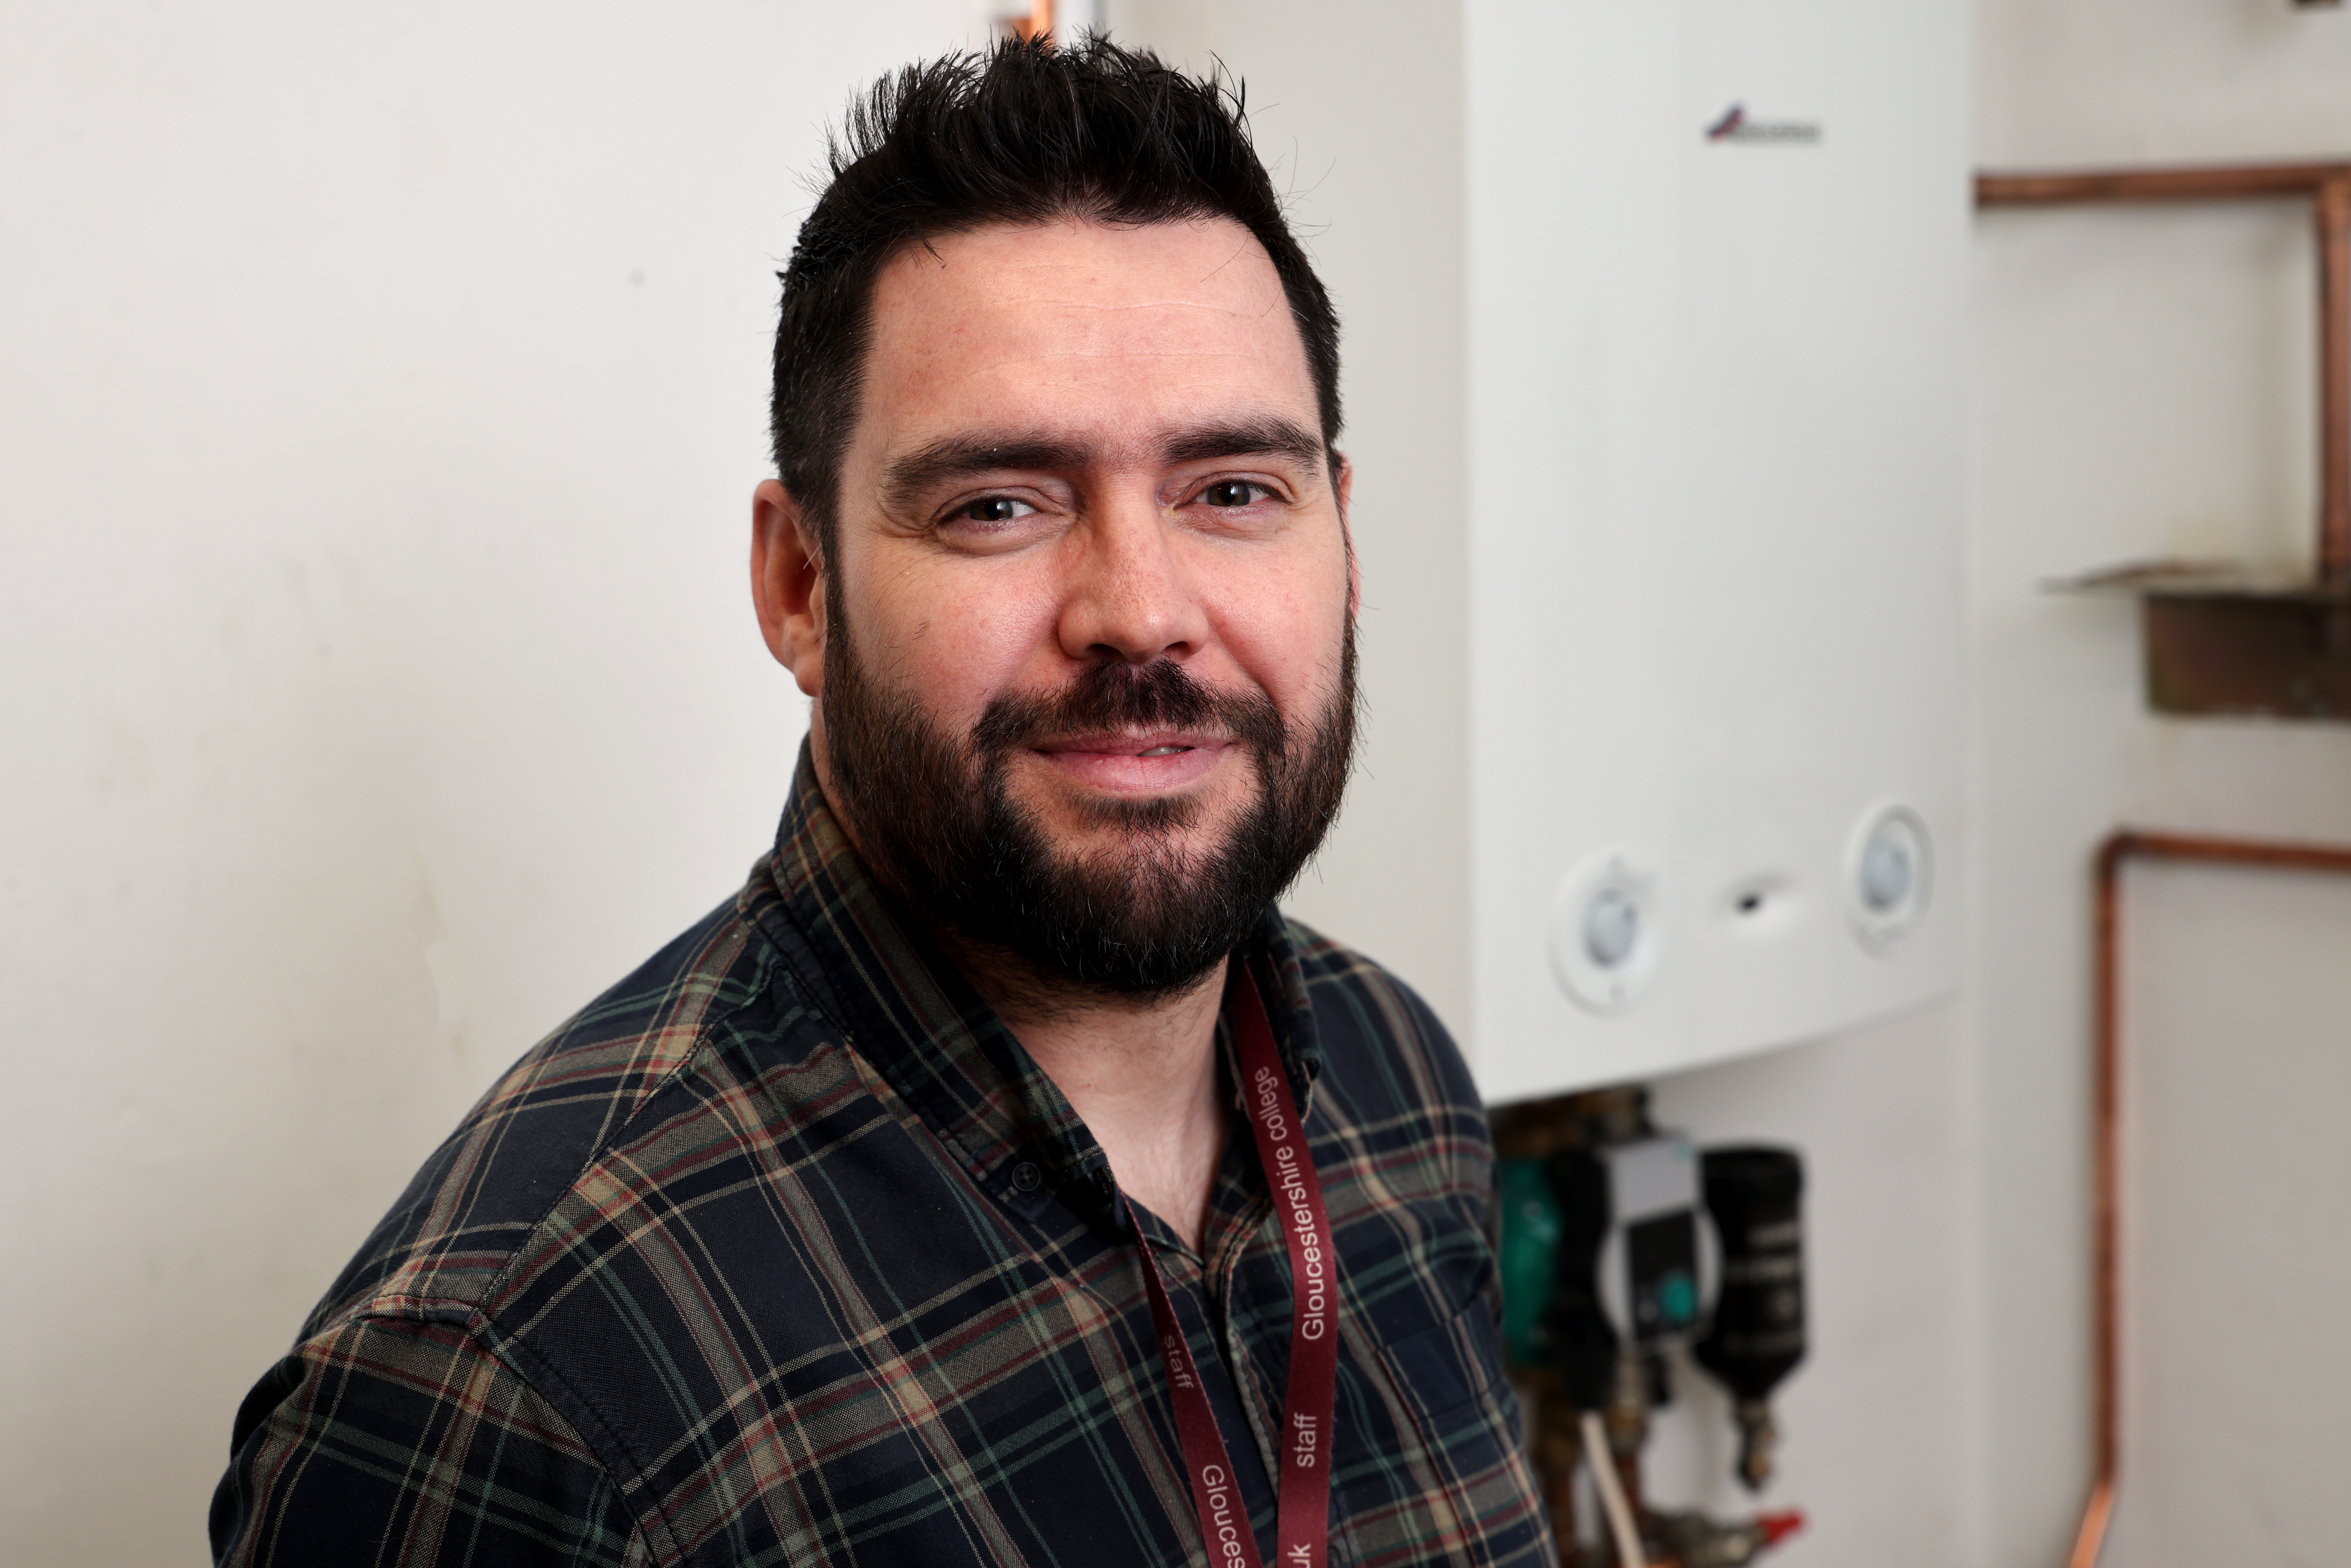 Meet James Turley, Plumbing/Domestic Heating Lecturer at GC